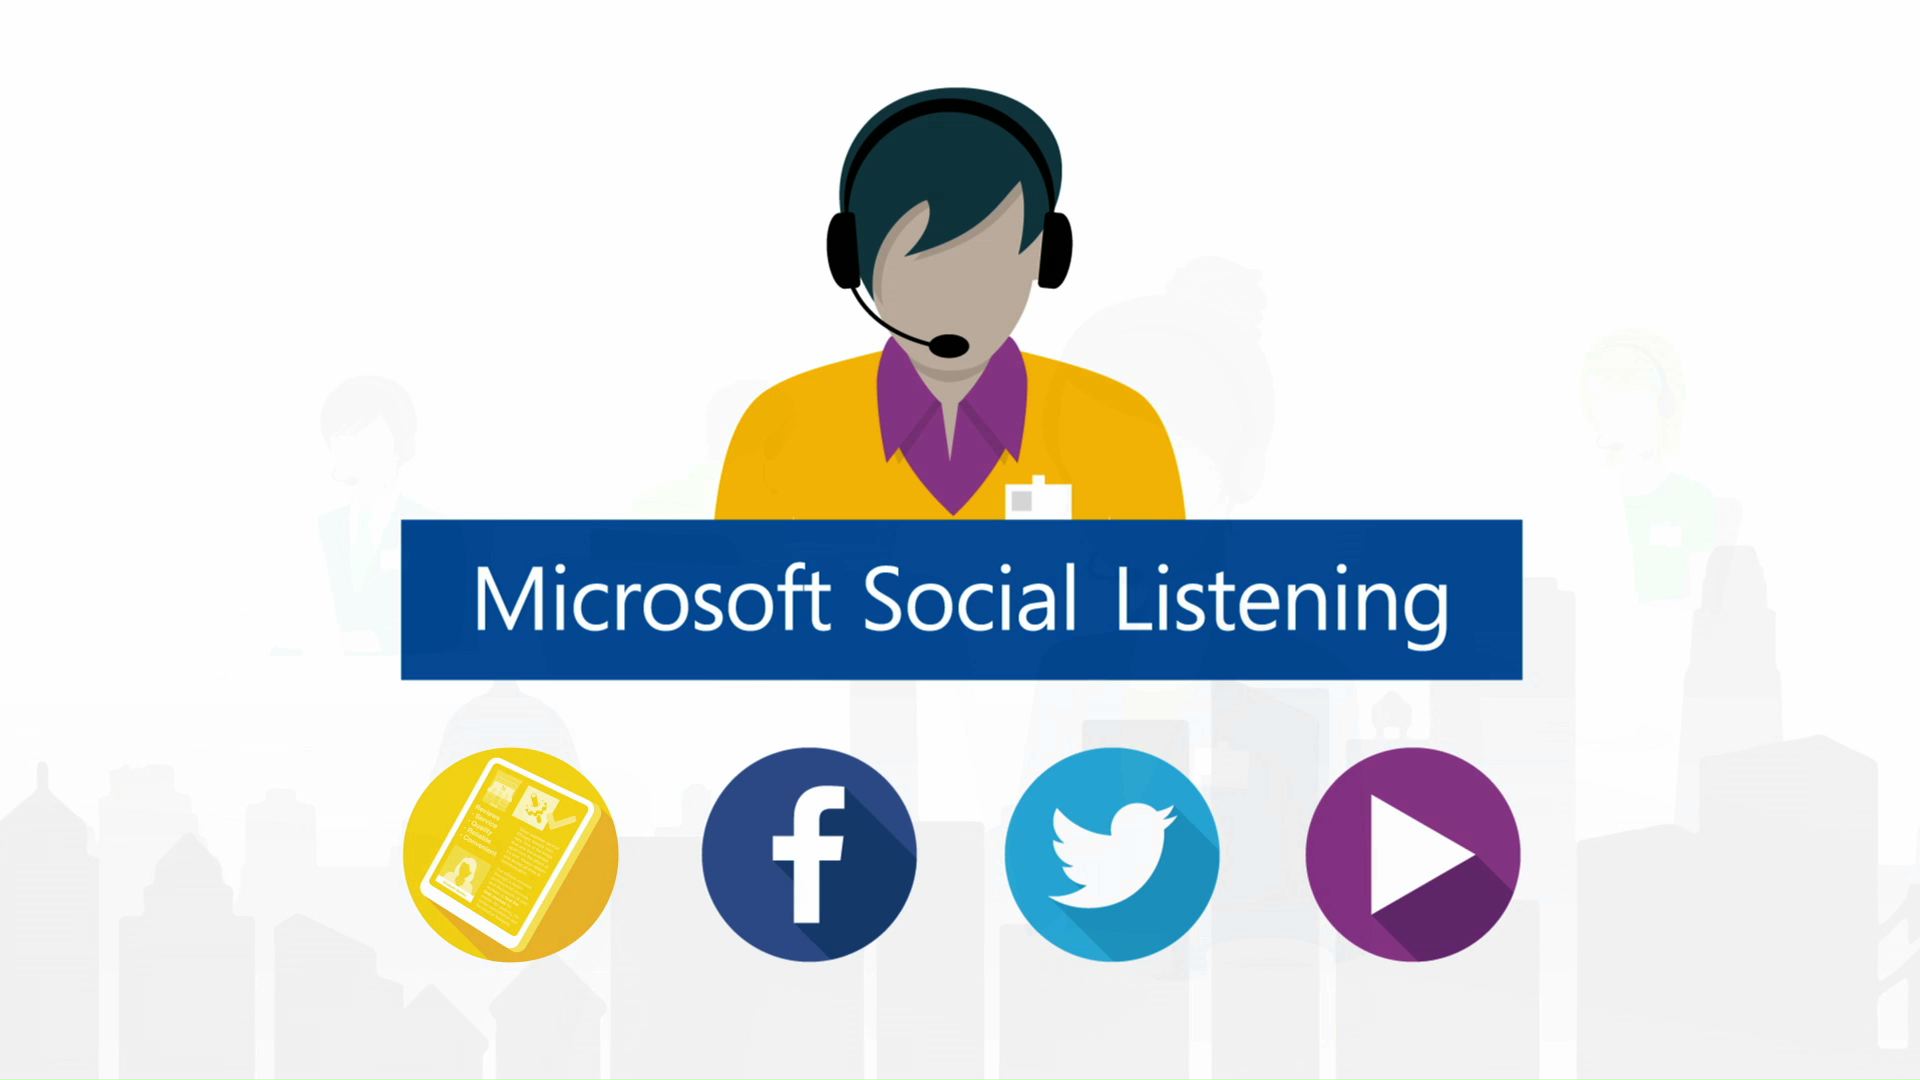 Microsoft, Animation, Microsoft CRM Services, Portfolio Image, Social Listing